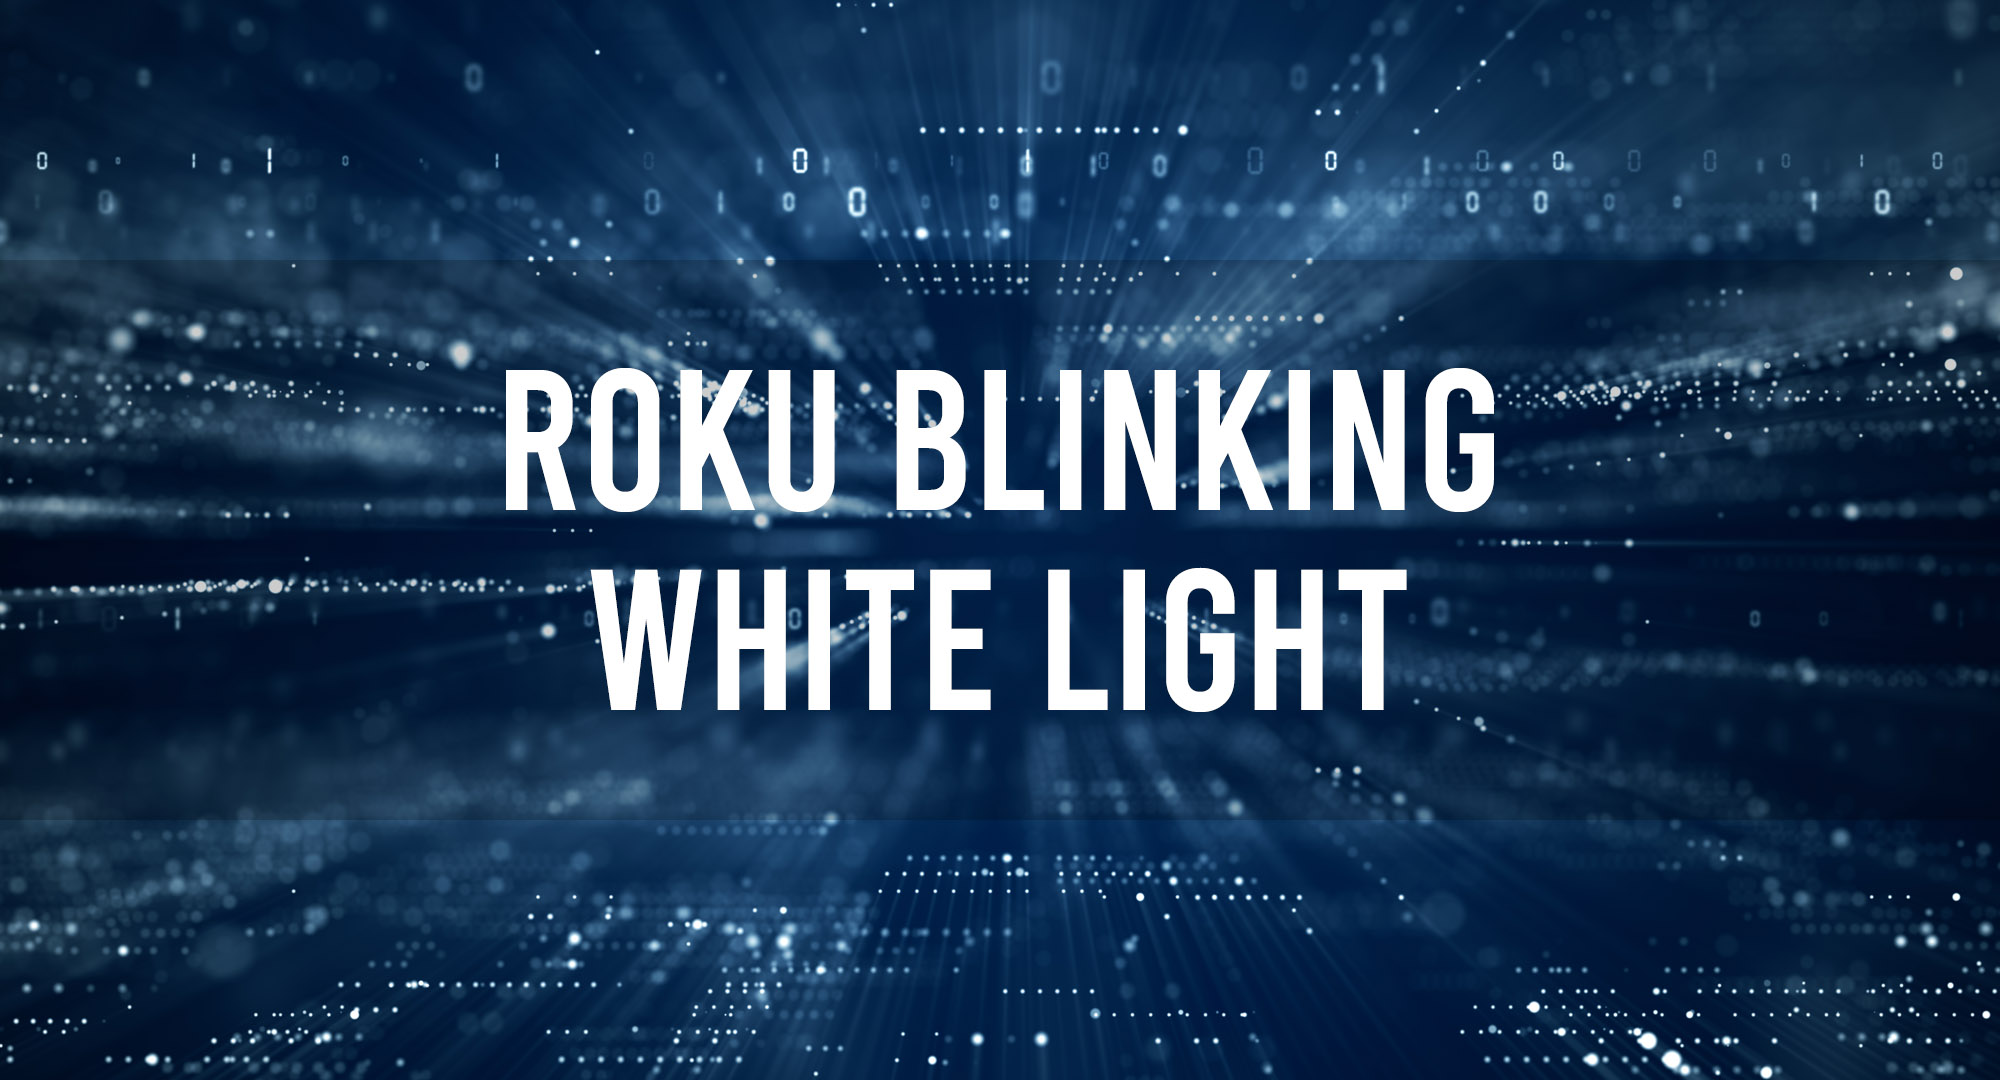 Roku Bilking White Light